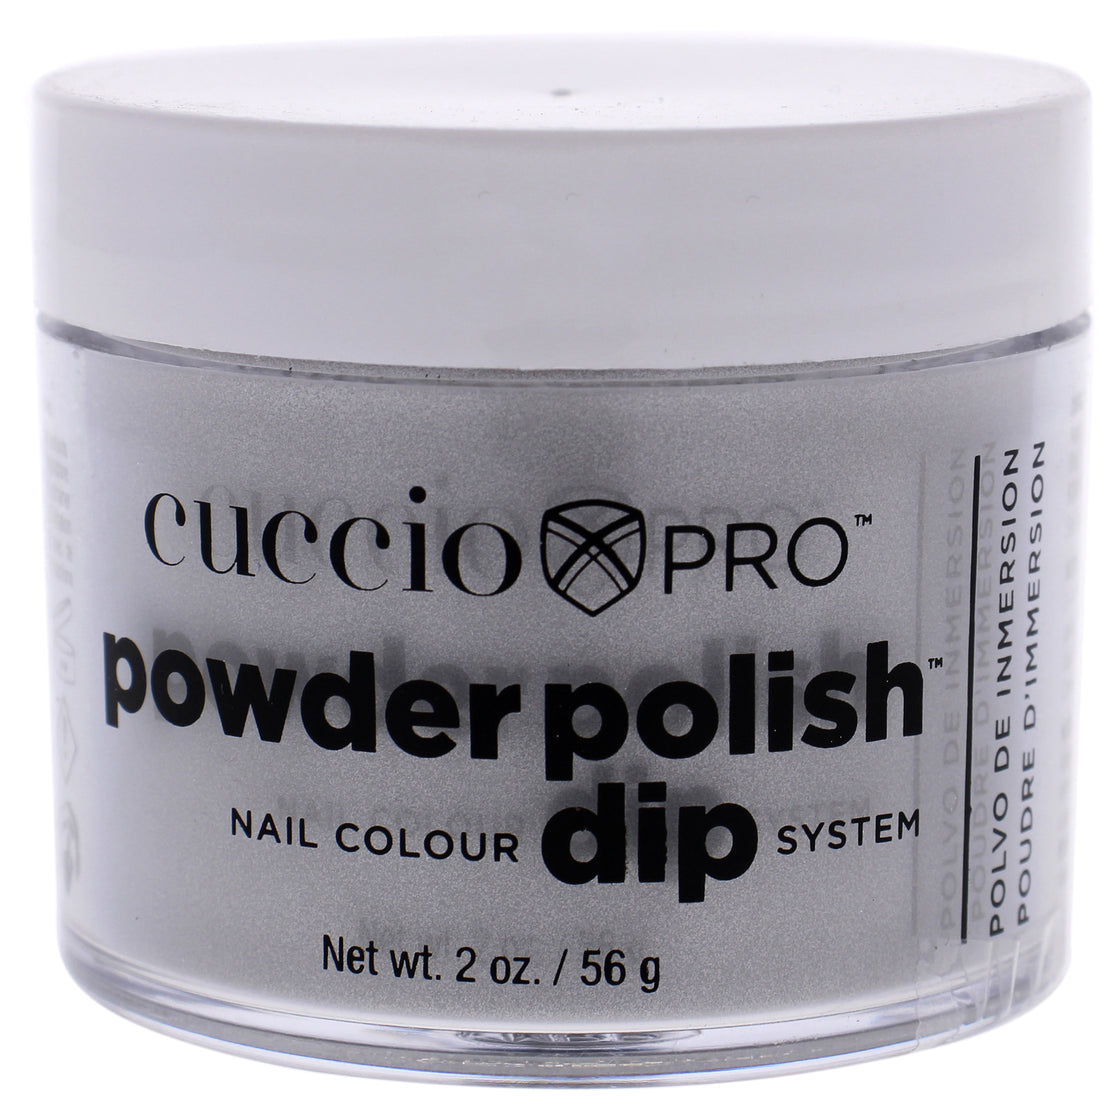 Pro Powder Polish Nail Colour Dip System - Just A Prosecco by Cuccio Pro for Women - 1.6 oz Nail Powder